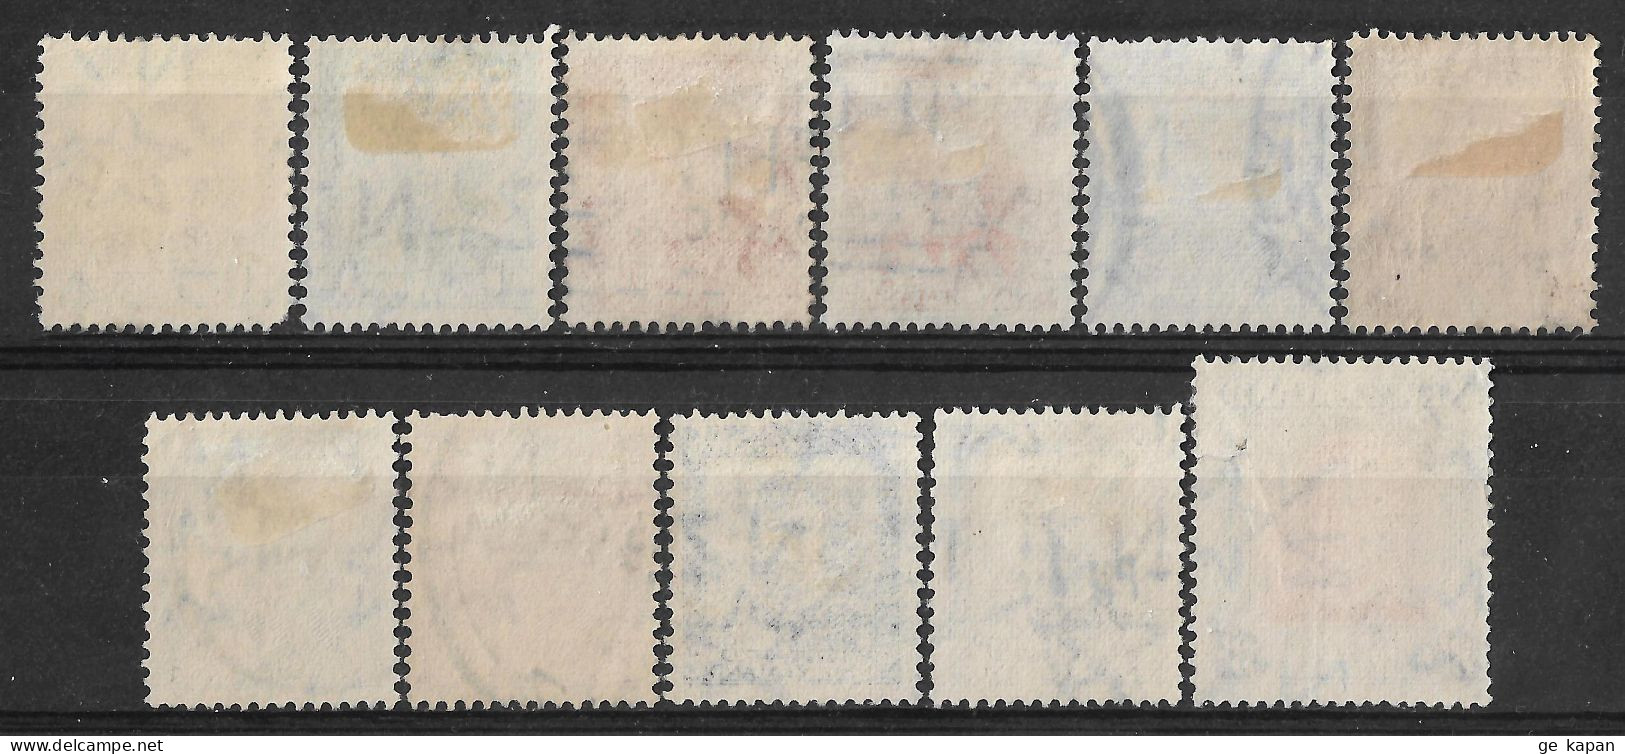 1938-1947 NEW ZEALAND Set Of 11 Used Stamps (Scott # 227A,228B,228C,258,260-264,268) CV $4.40 - Gebraucht